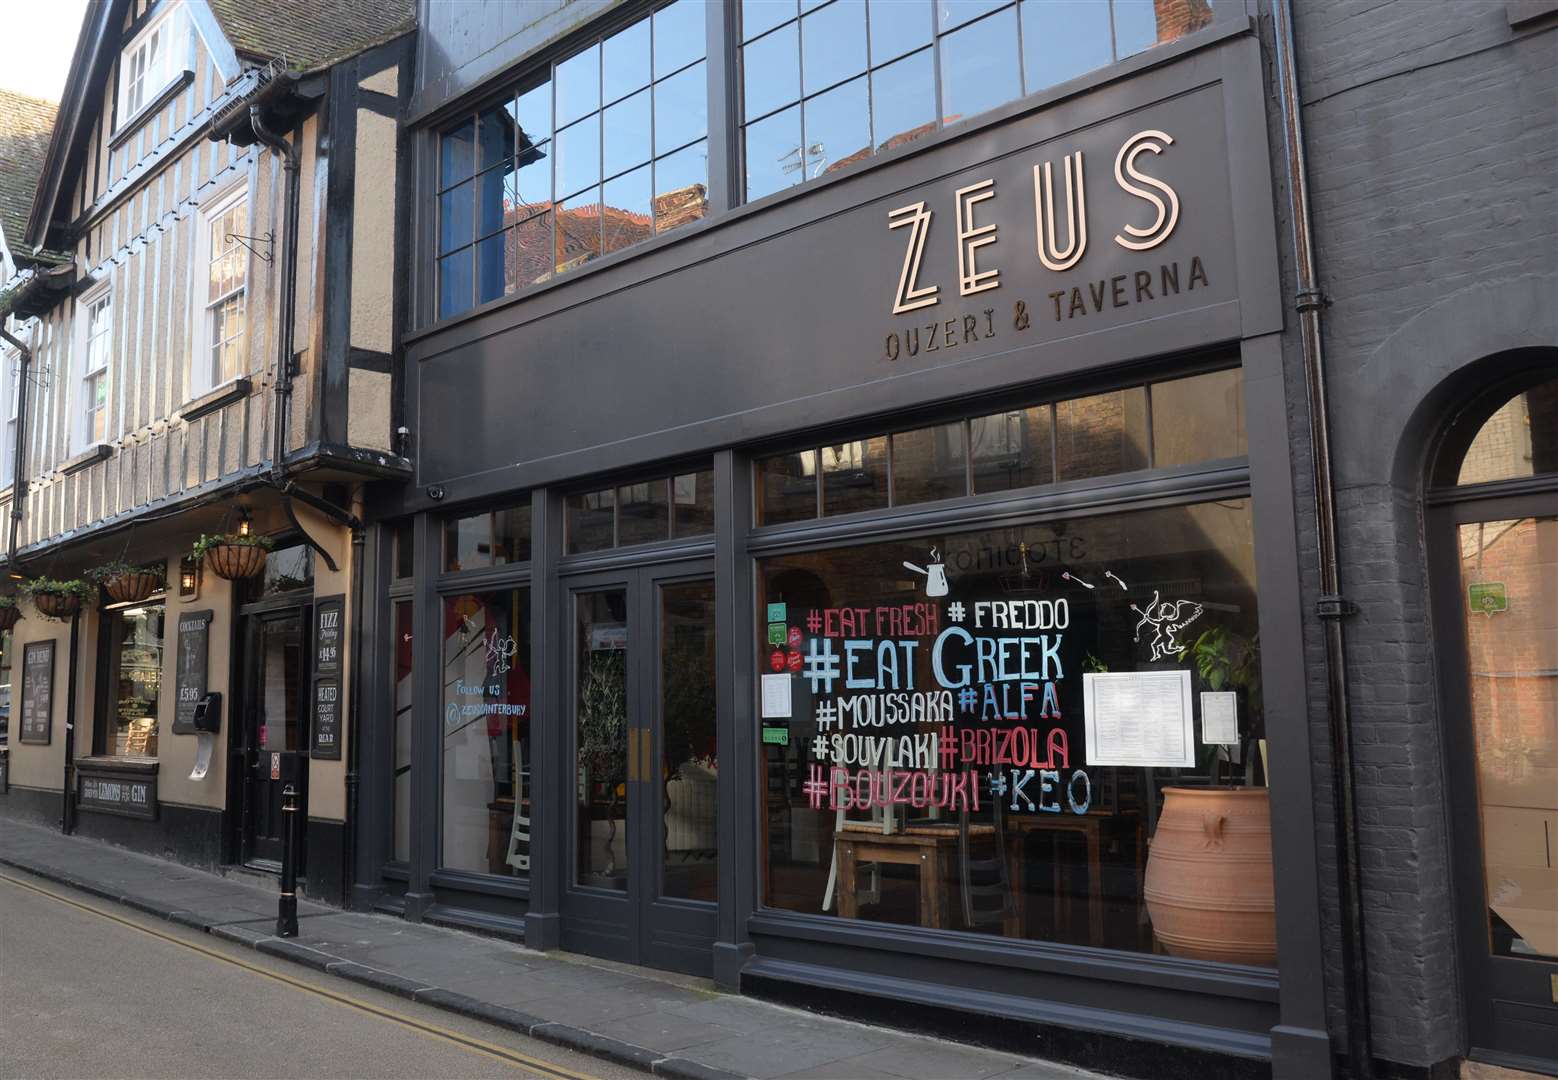 Zeus won't be reopening in Canterbury